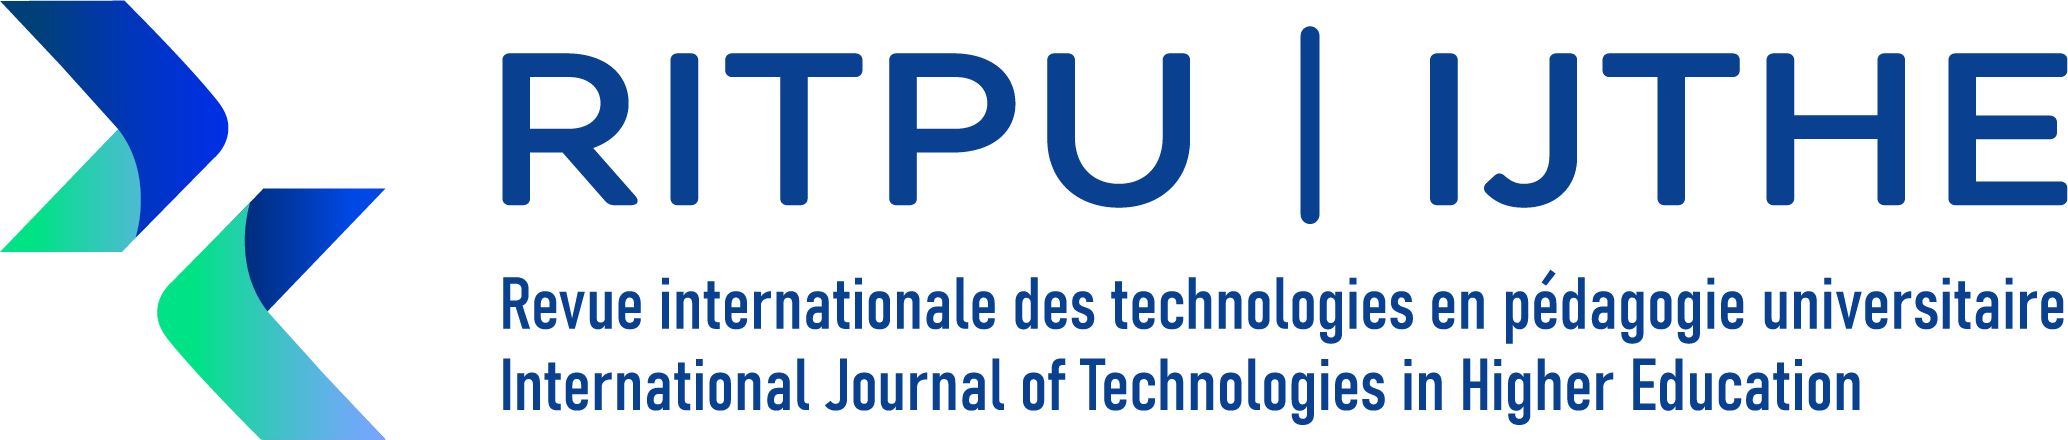 International Journal of Technologies in Higher Education